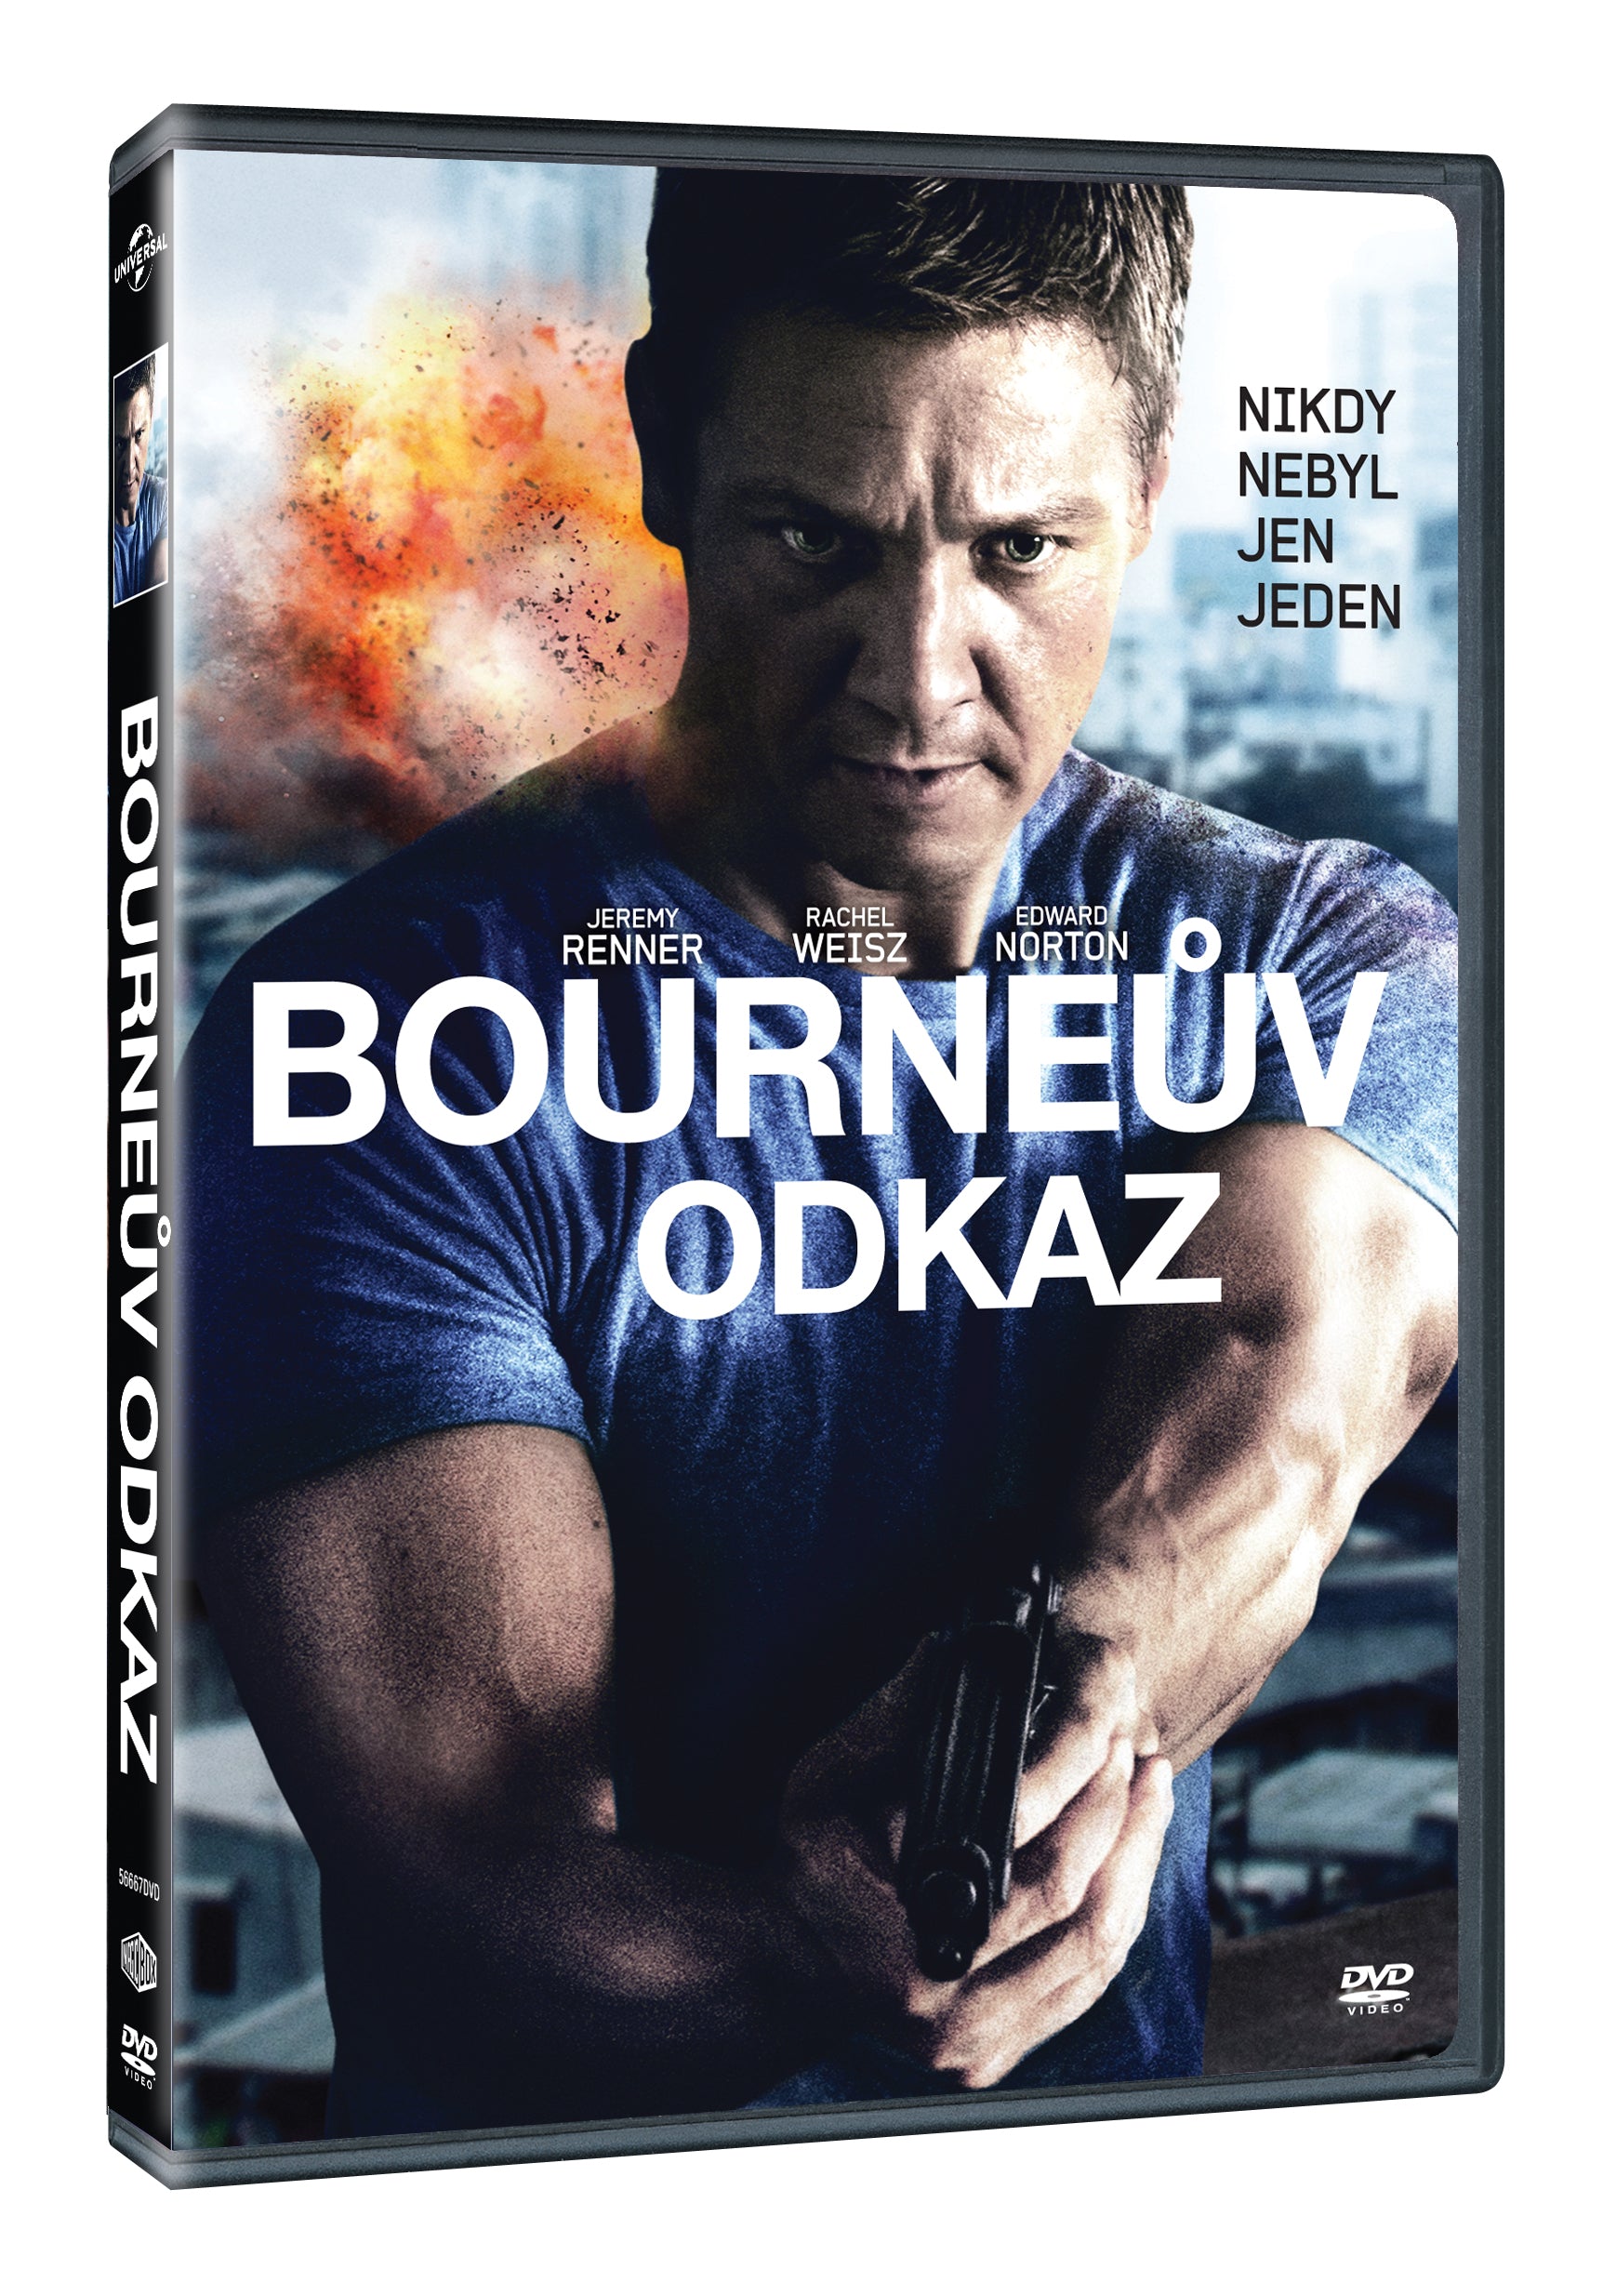 Bourneuv odkaz DVD / The Bourne Legacy